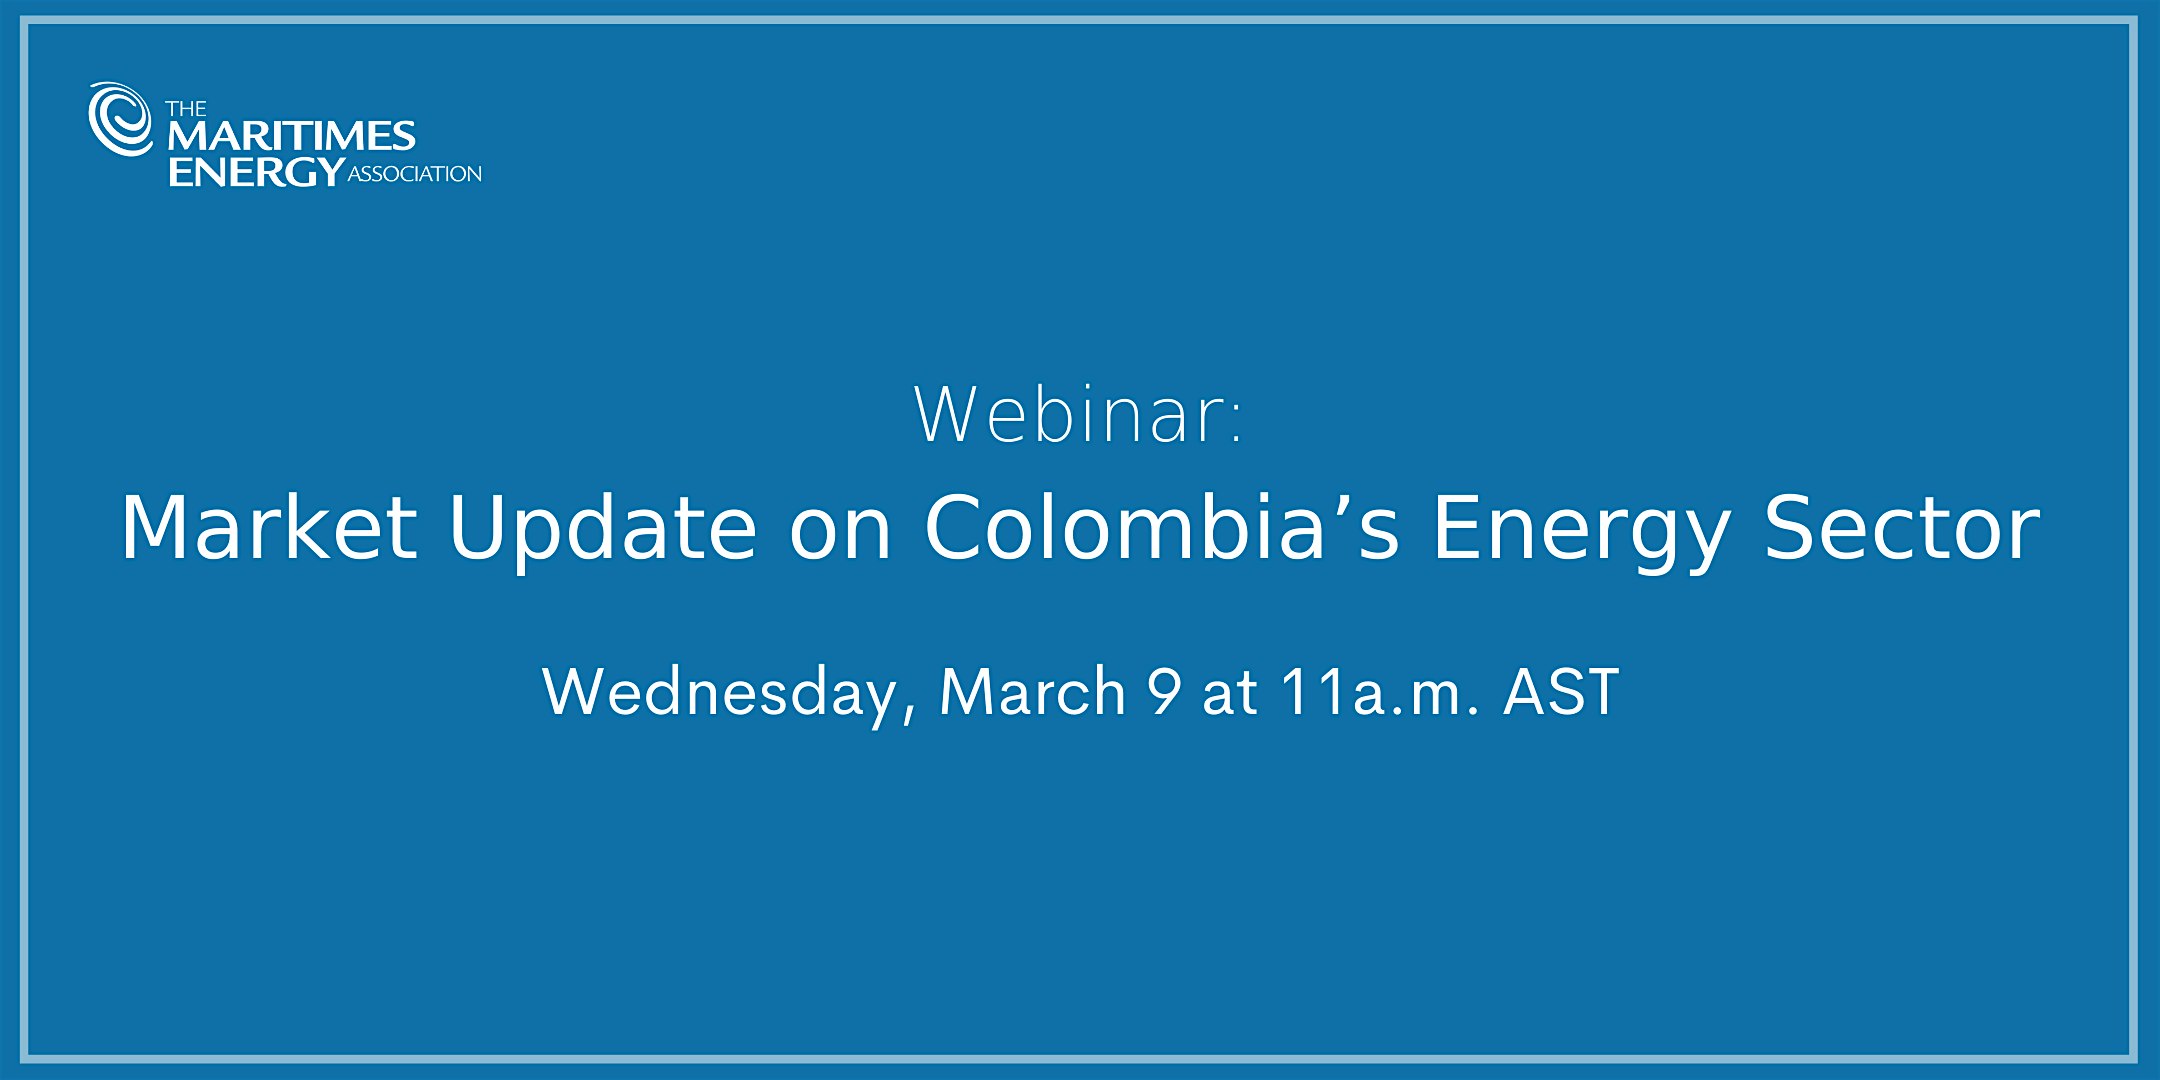 Webinar: Market Update on Colombia’s Energy Sector